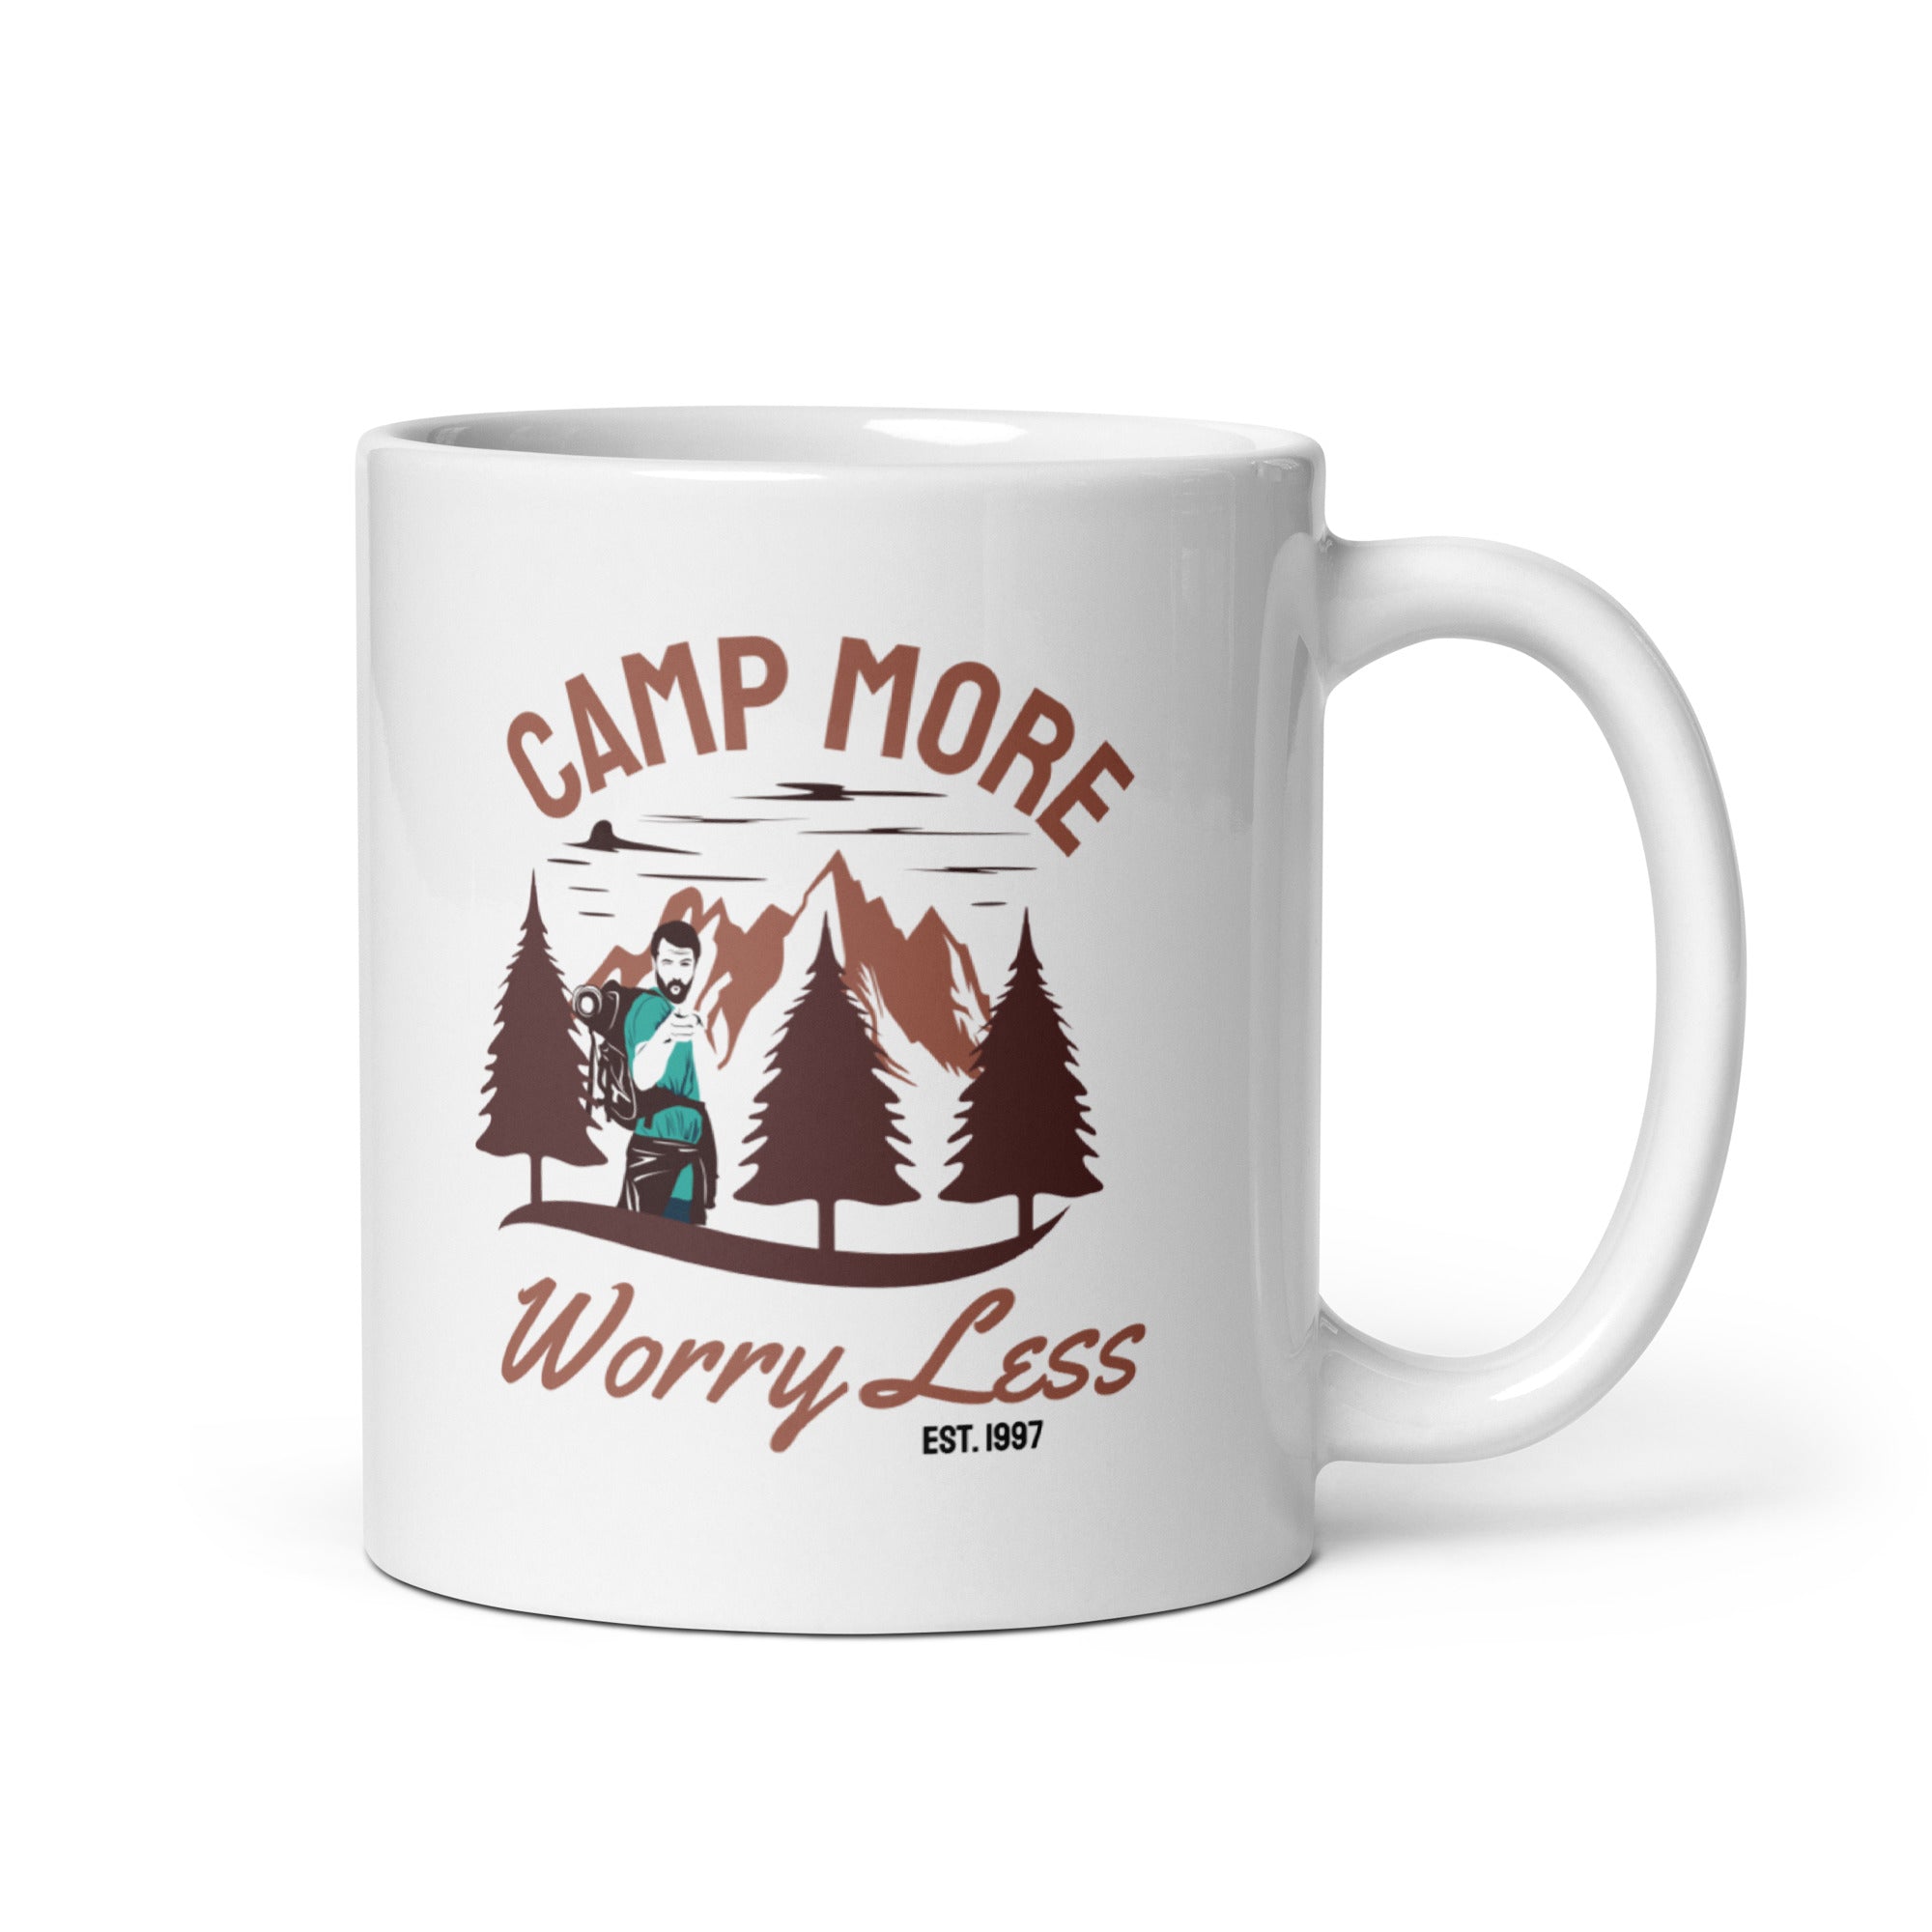 Camp More - White Mug